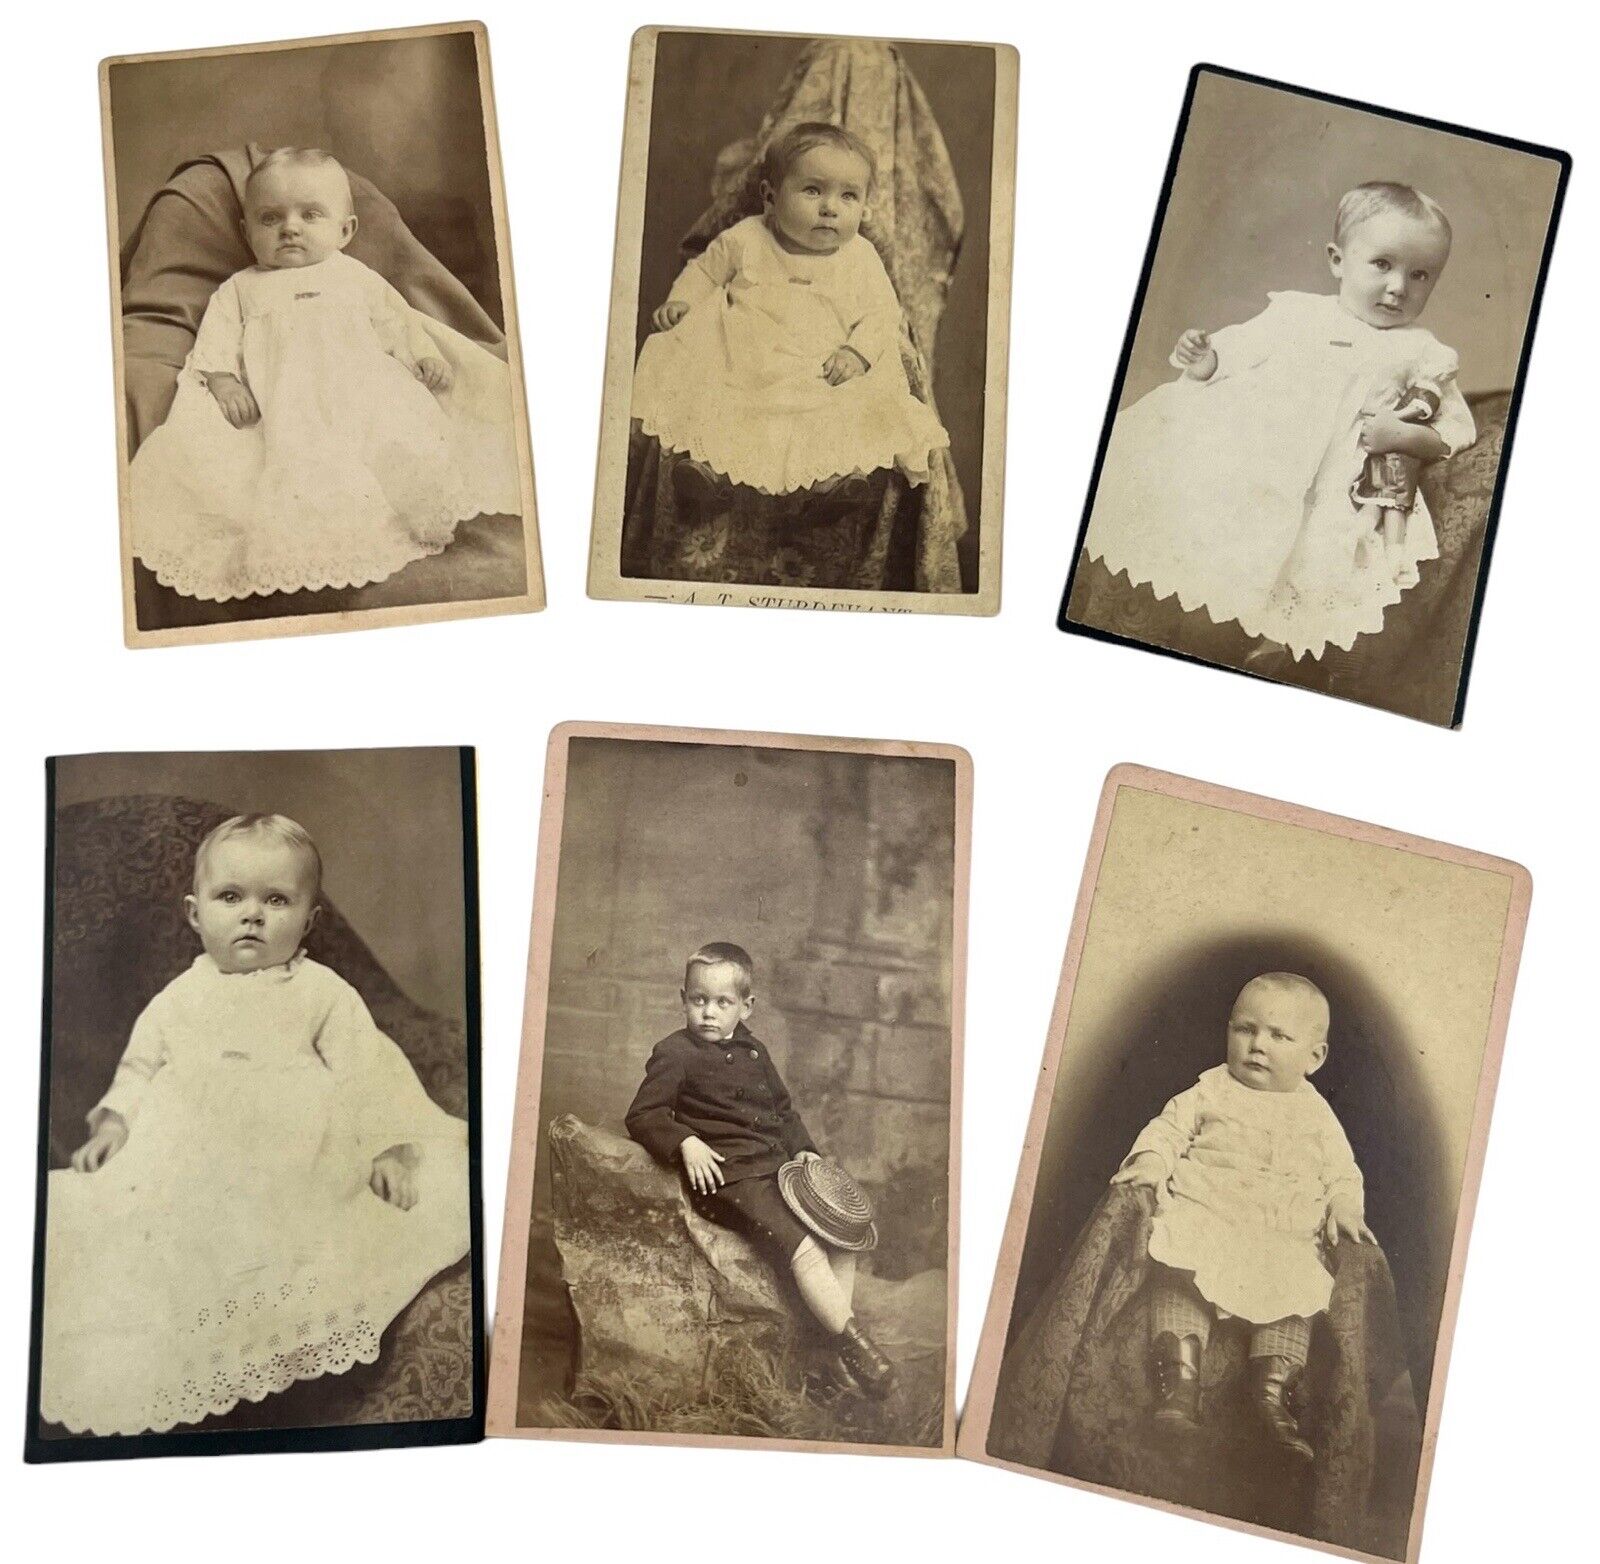 Antique Cabinet Photos 5 Babies And A Little Boy Sepia Tones Cherub Faces 3.75”